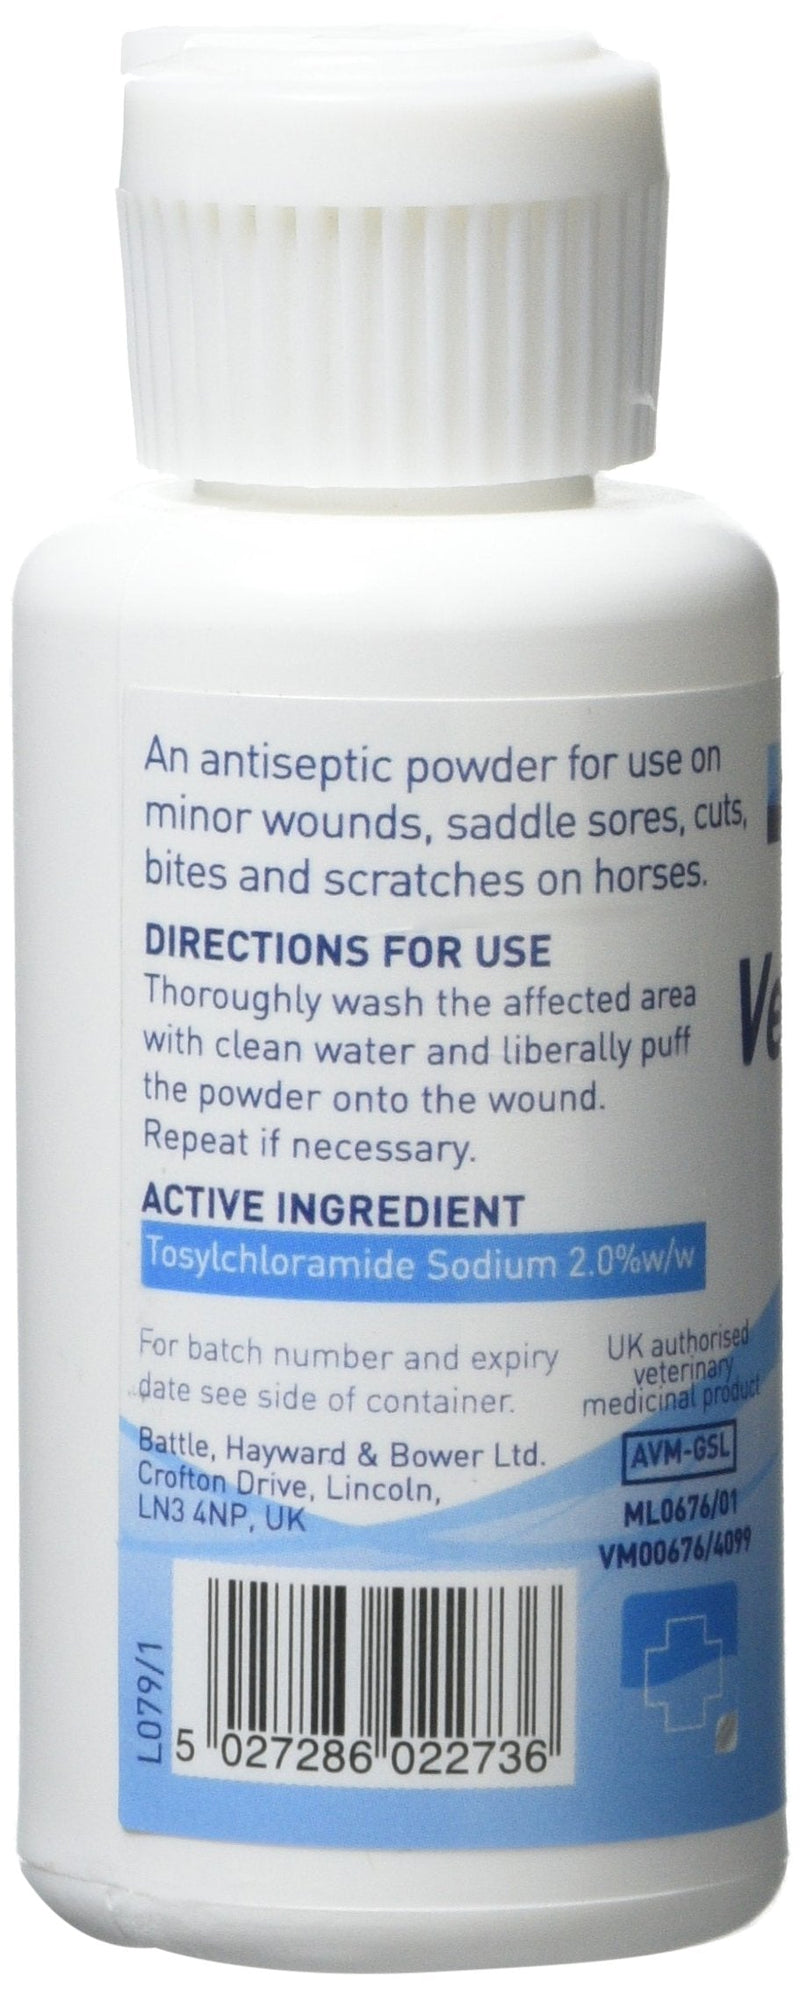 Battles Veterinary Wound Powder 20 g (Pack of 1) White - PawsPlanet Australia